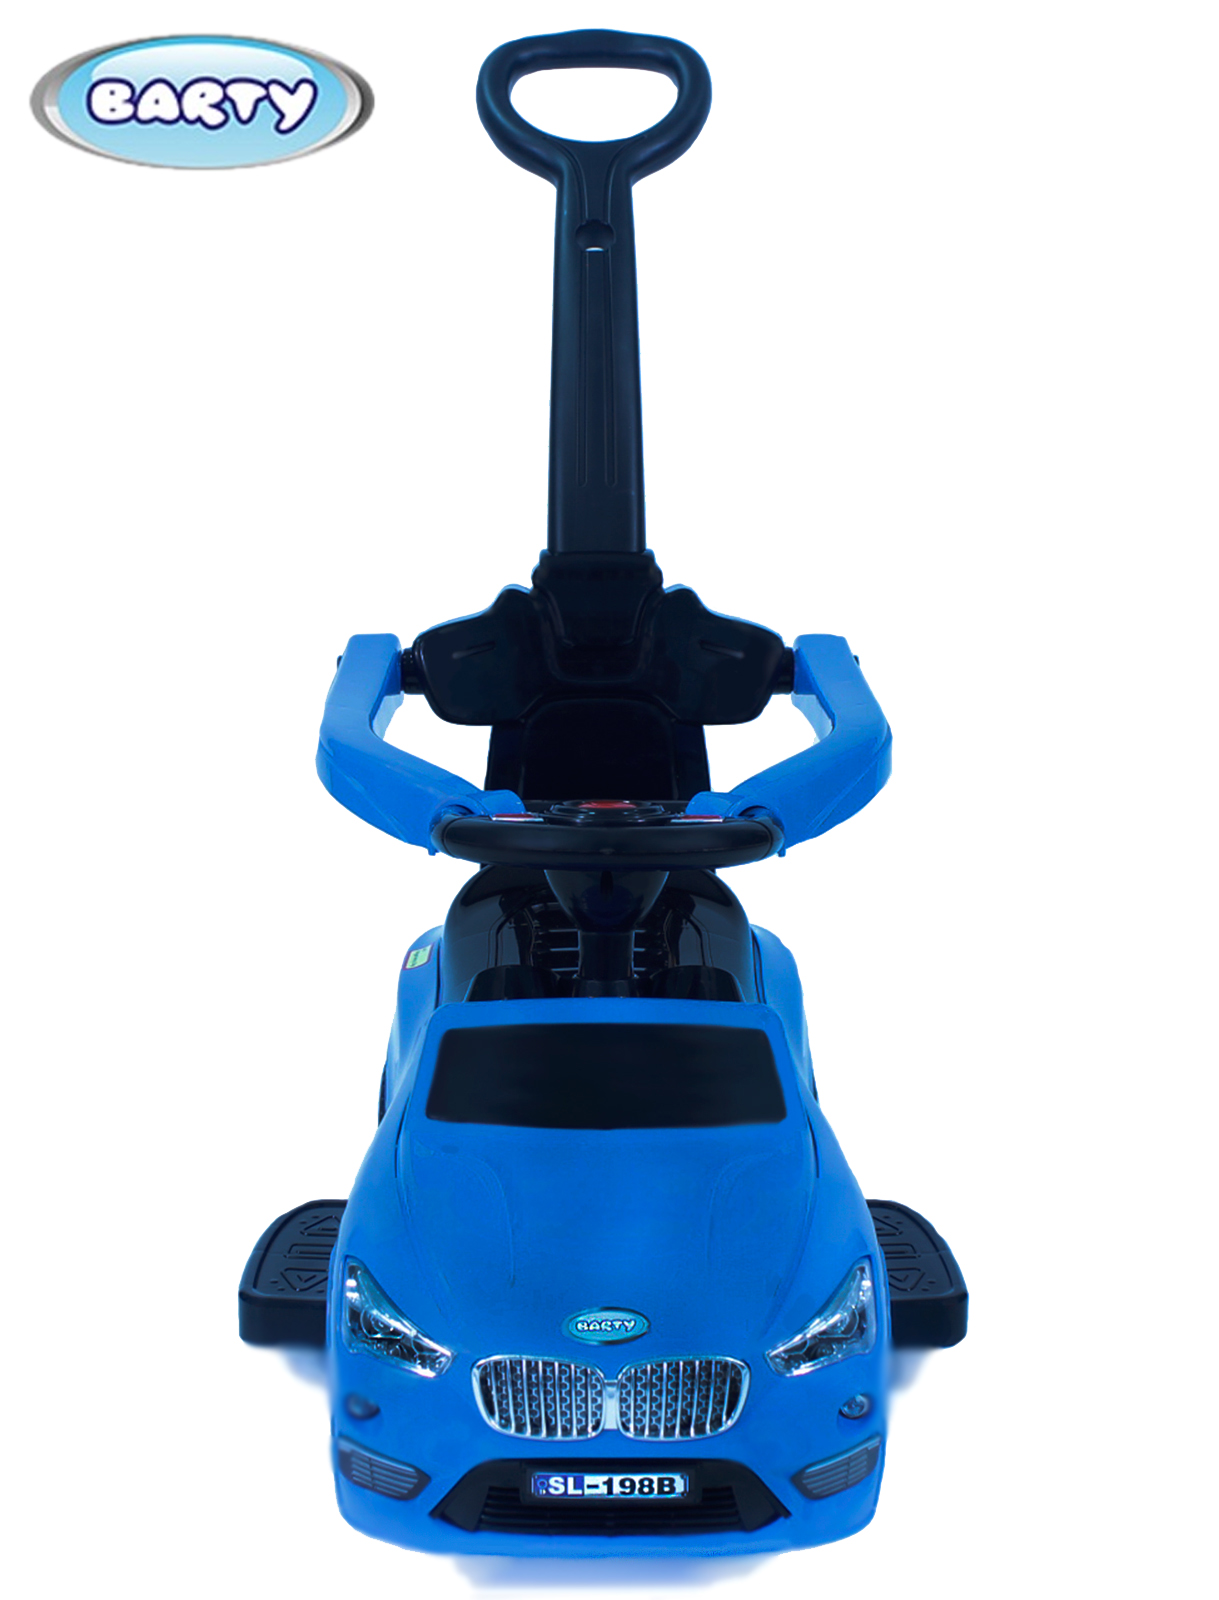 Толокар BMW (Синий) Barty S03